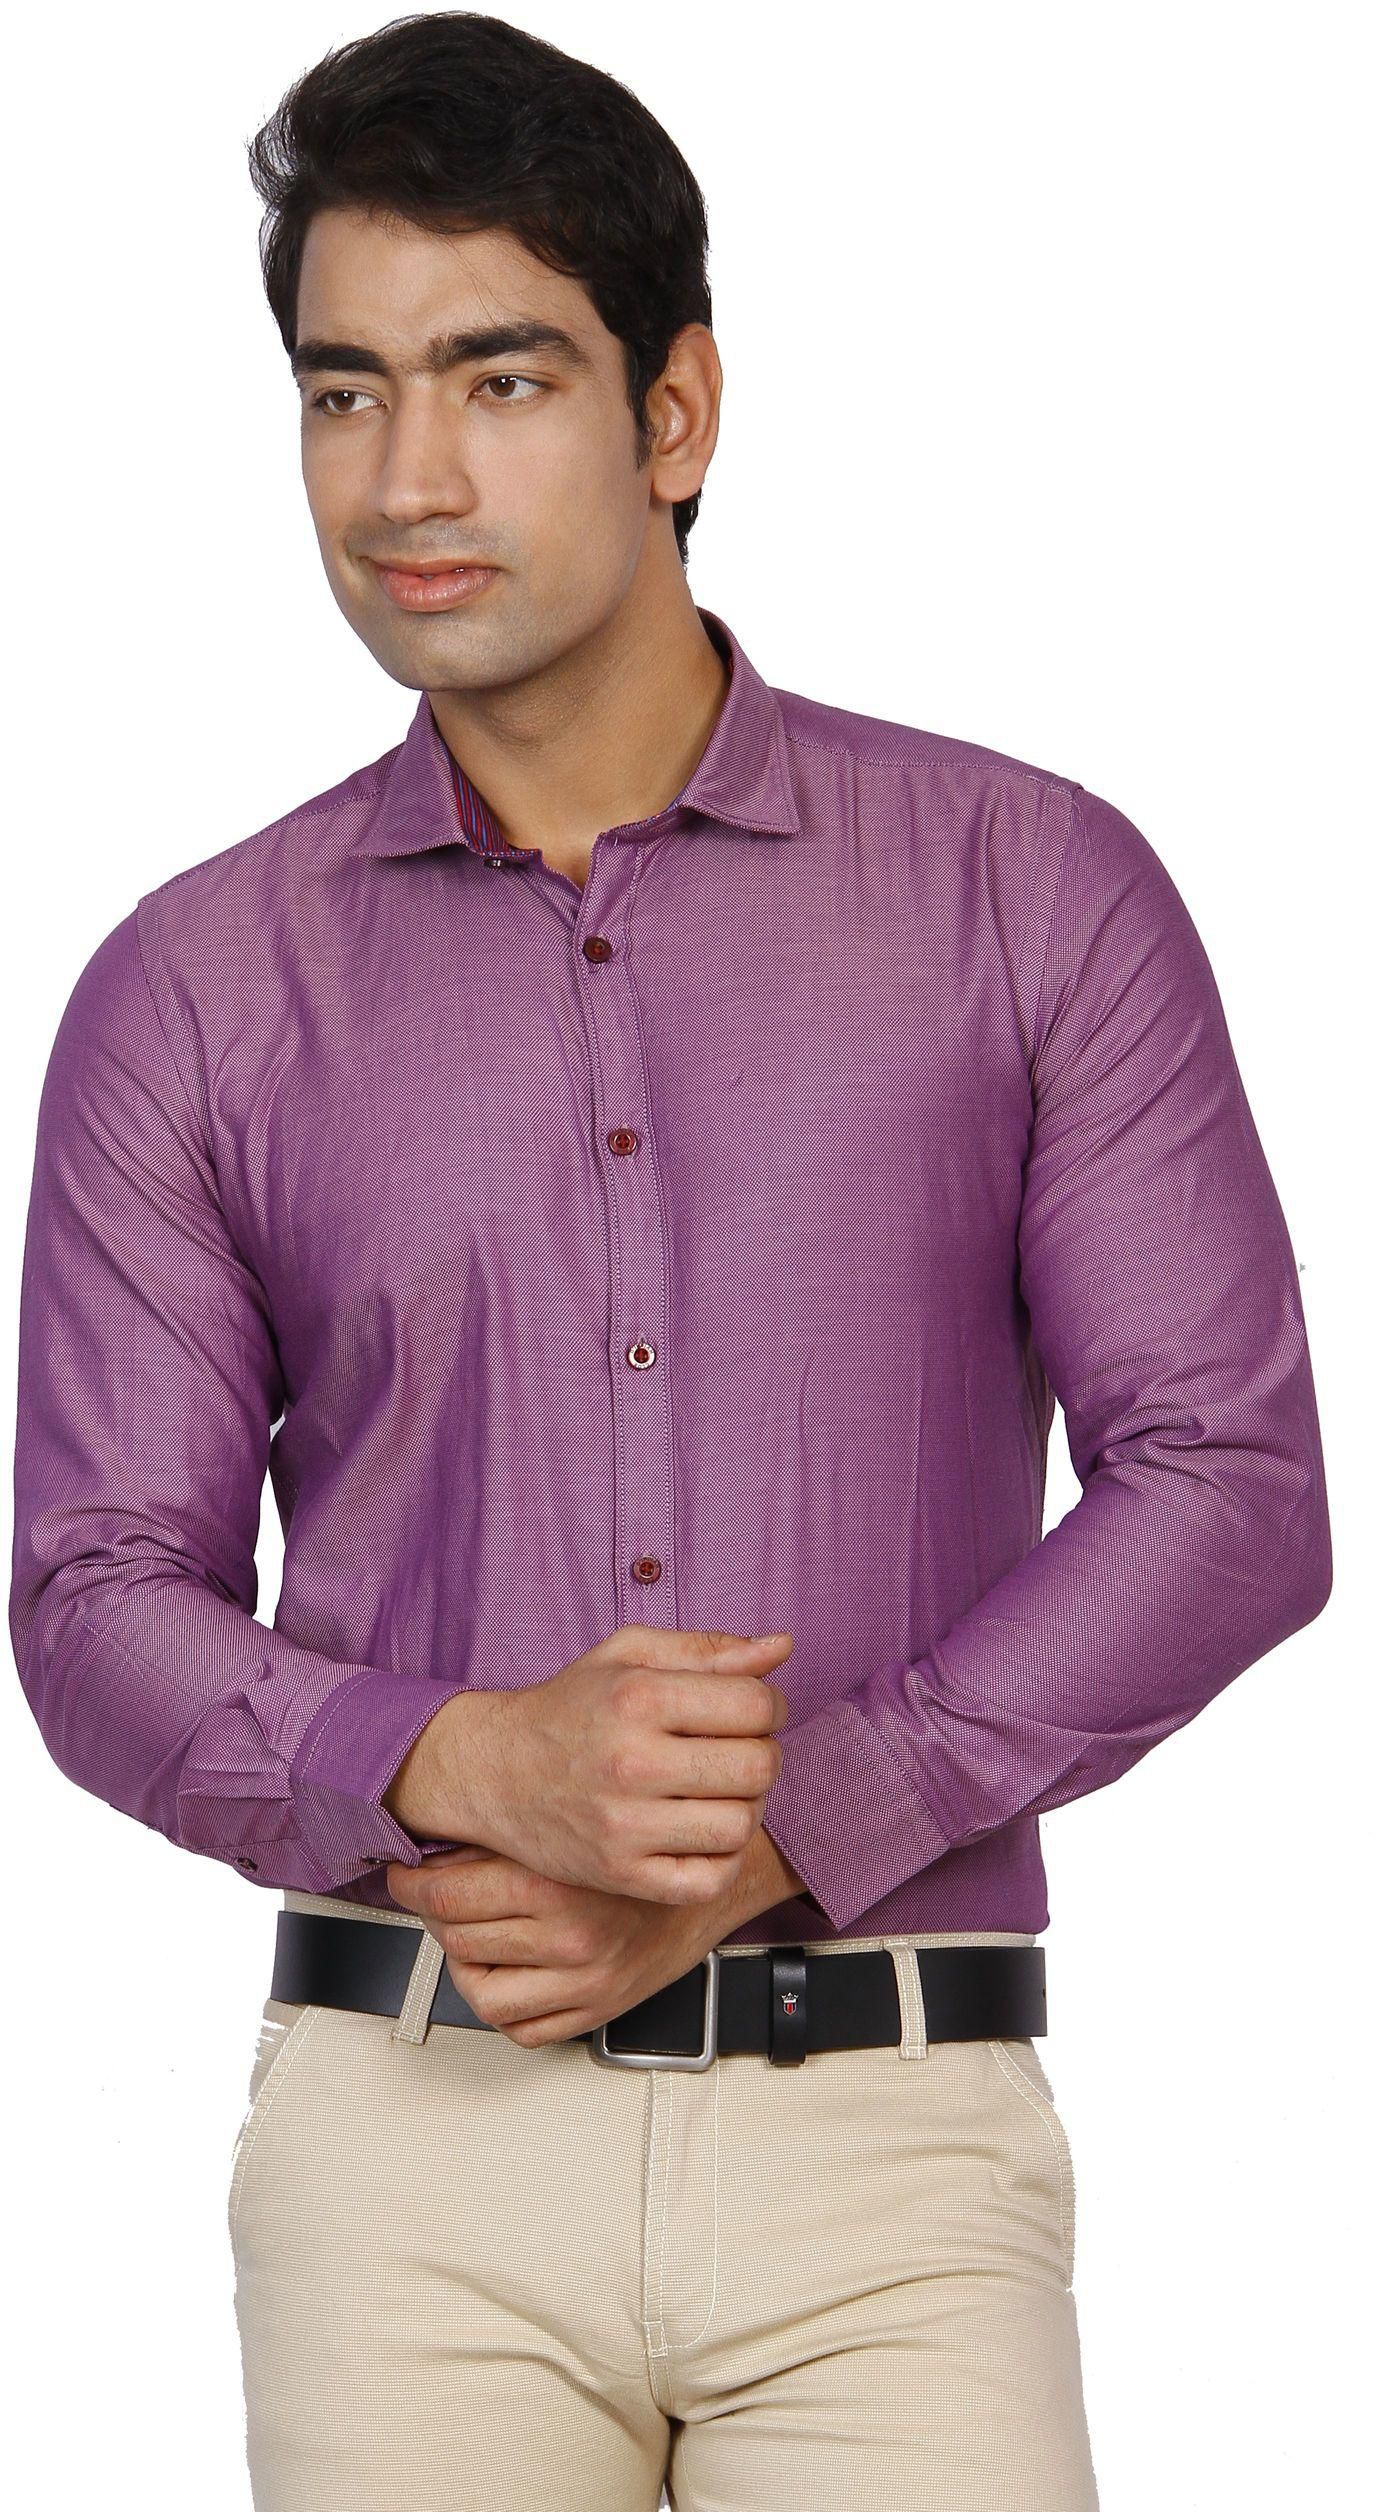 D'Indian CLUB Premium Cotton Men's Full Sleeve Formal, Festive Pink Self Design Shirt Size XL